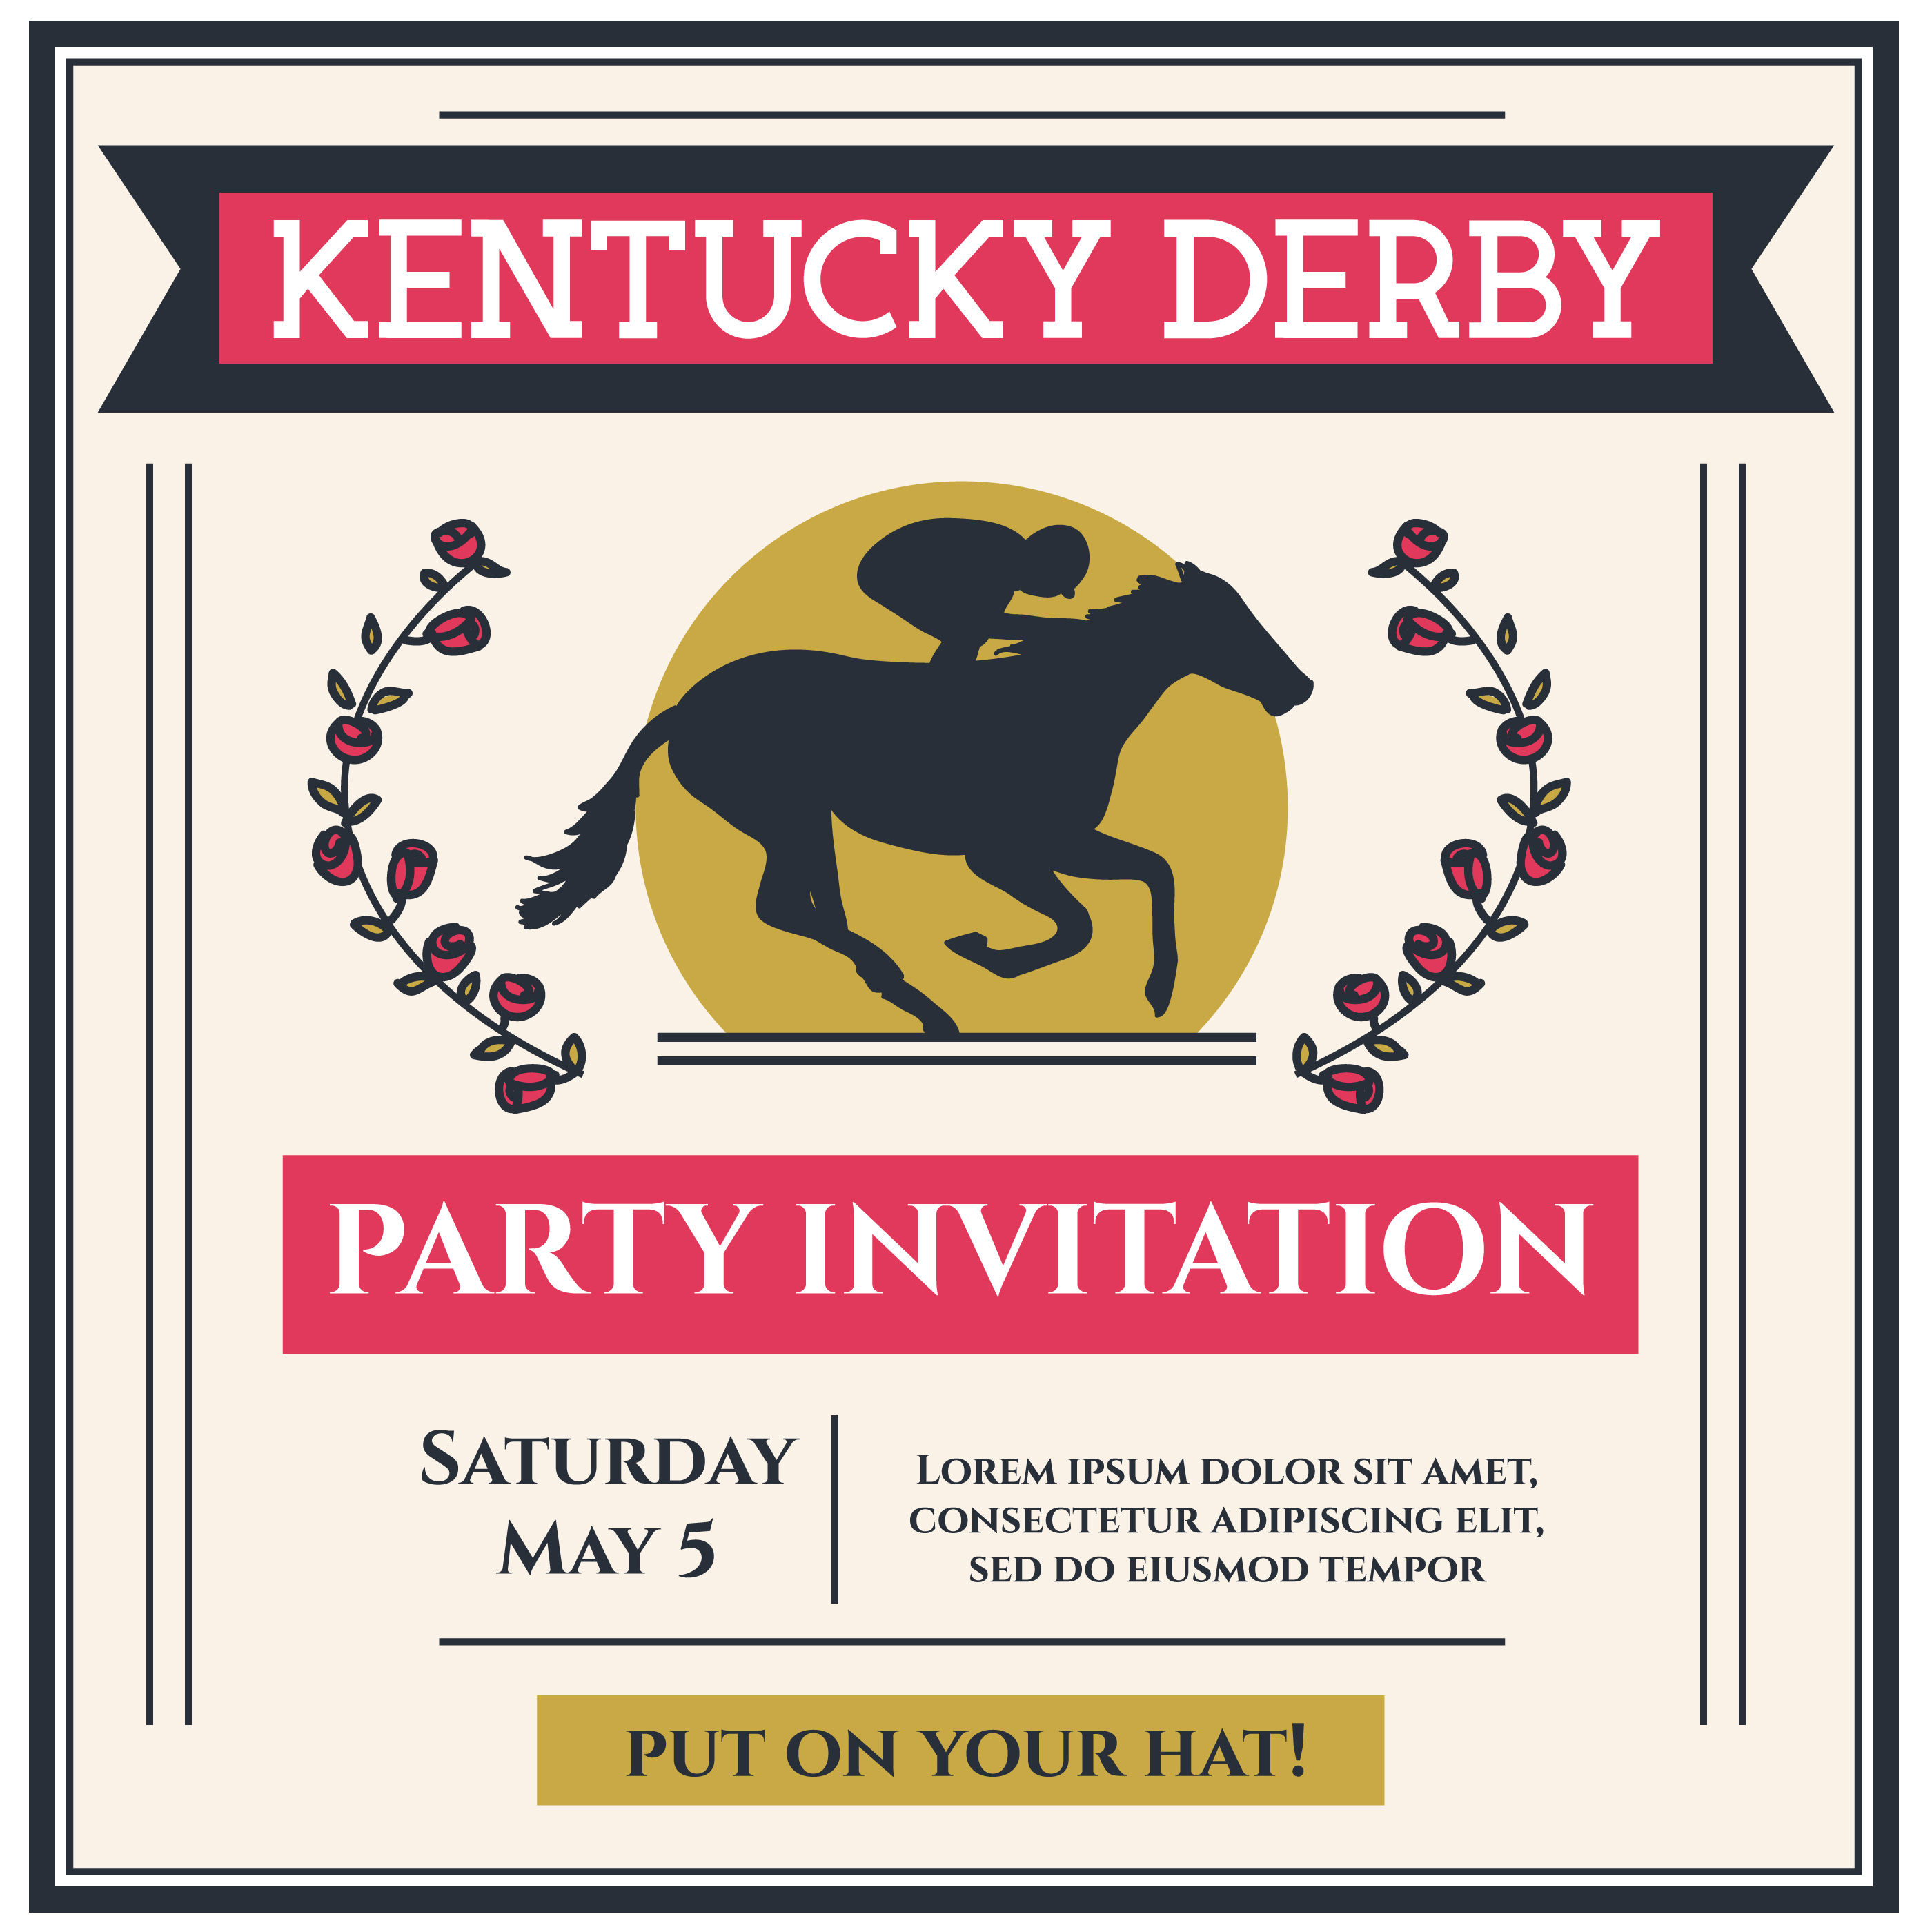 kentucky-derby-party-invitation-vector-198644-vector-art-at-vecteezy